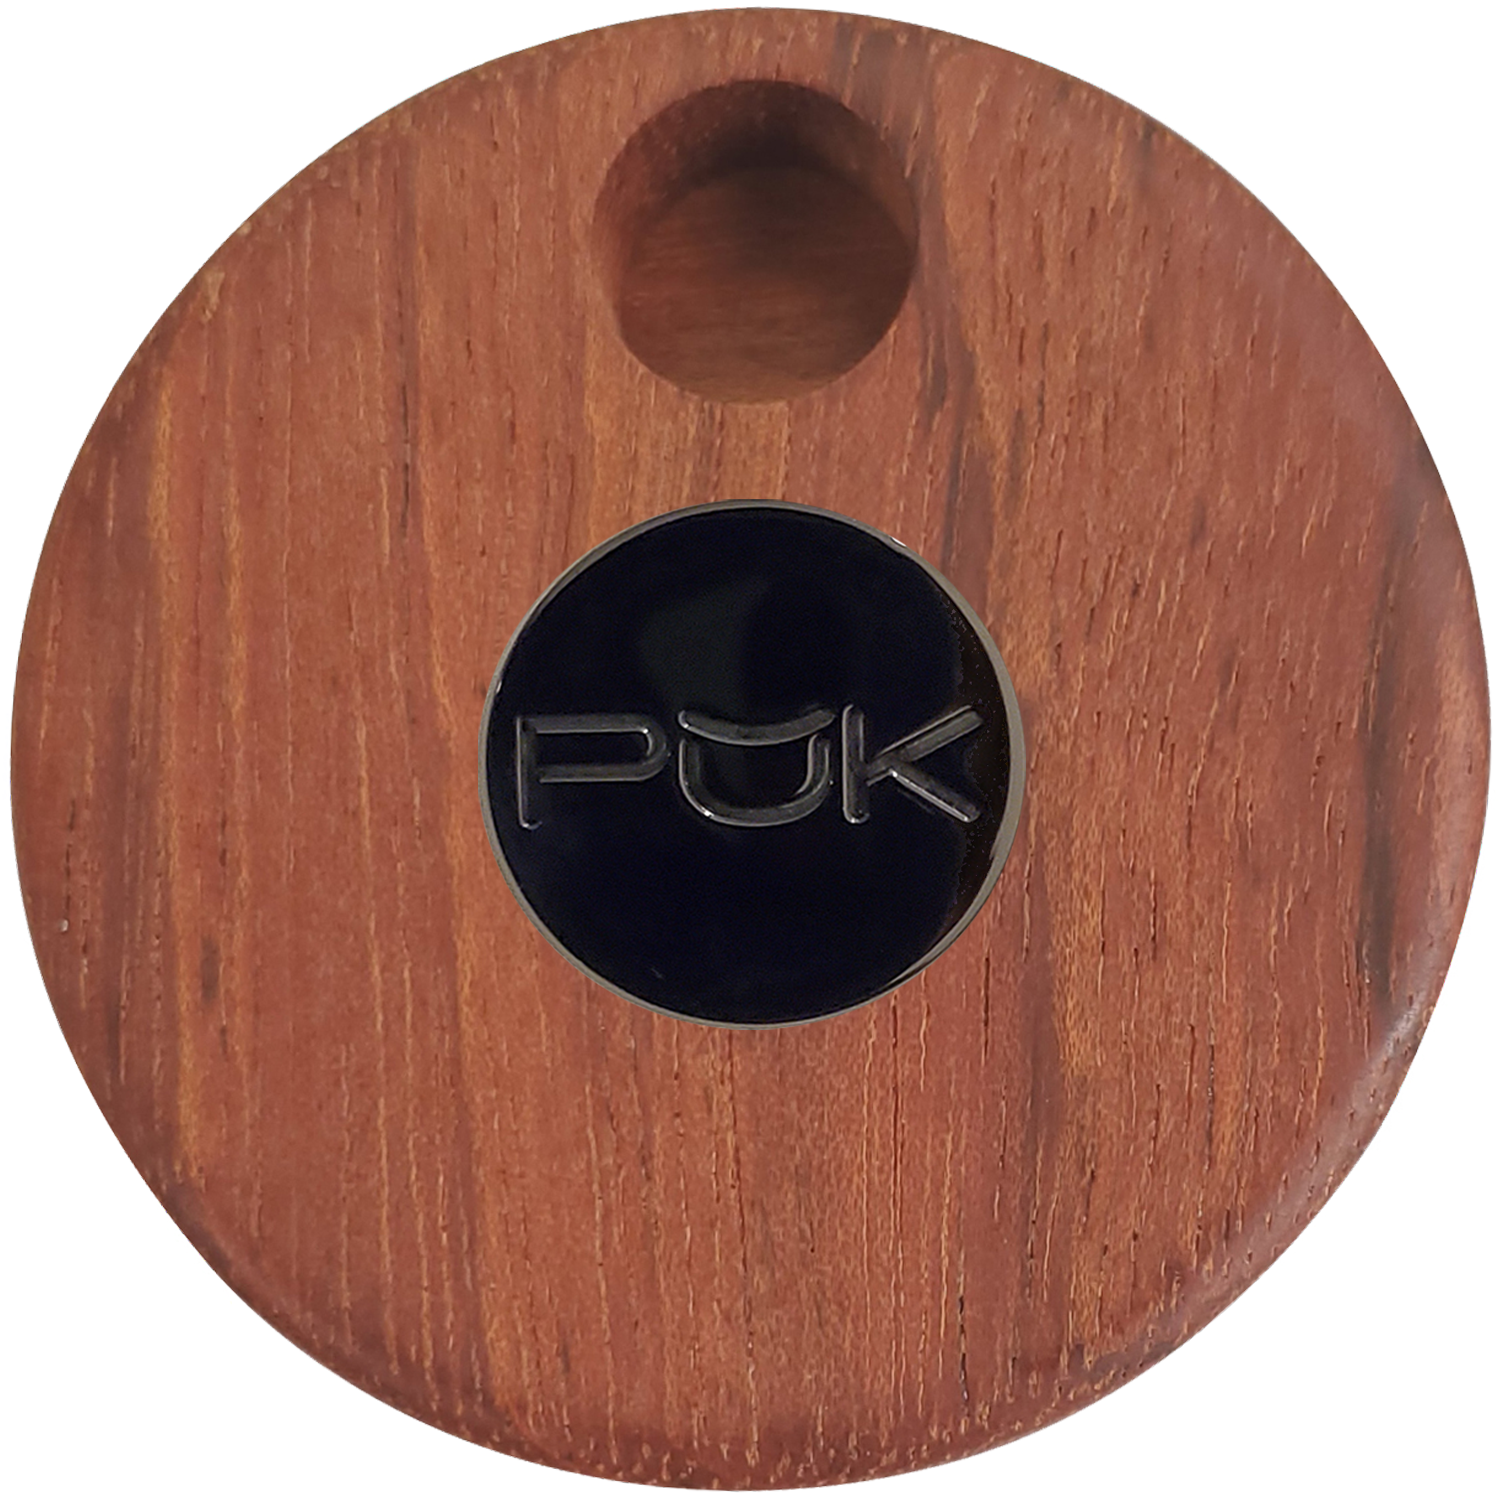 Wood PŬK Cannabis Container | PŬK Smoking Device | PUK ONLINE STORE